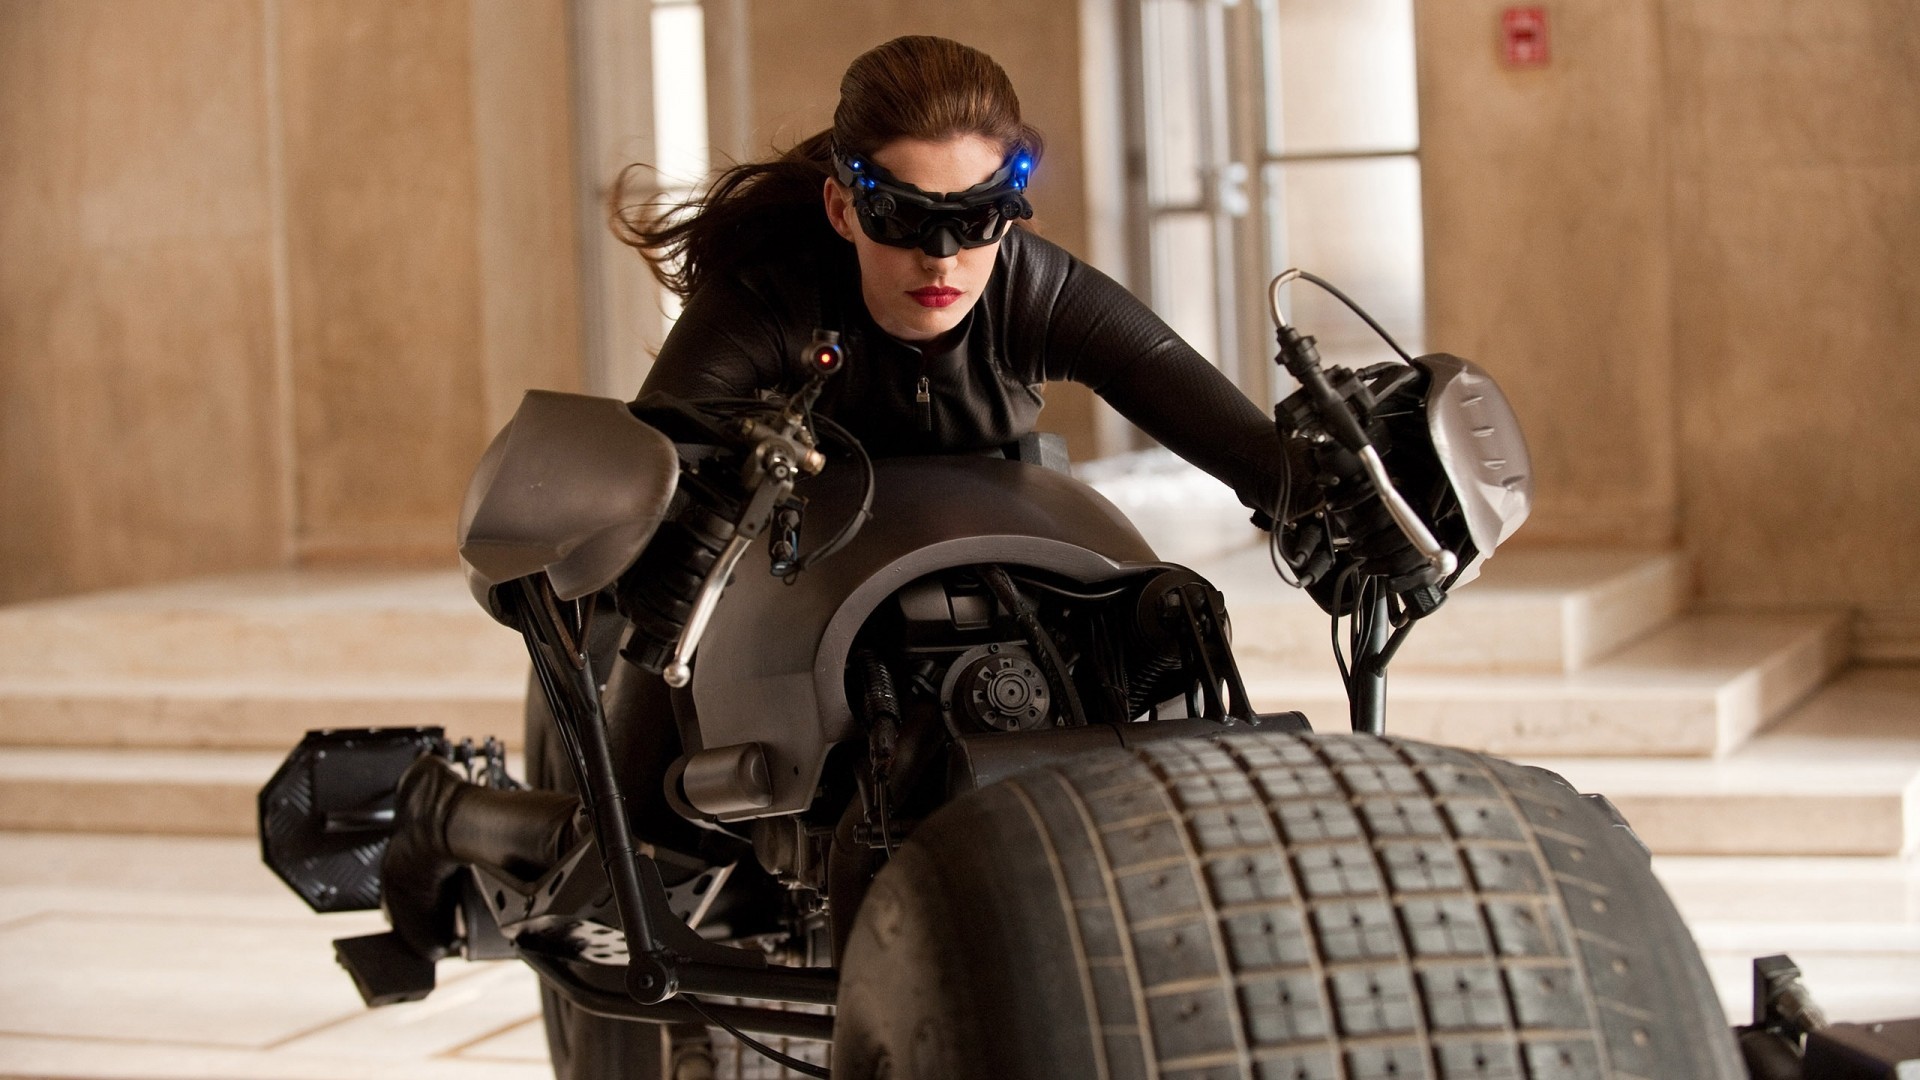 General 1920x1080 movies The Dark Knight Rises Catwoman Anne Hathaway Selina Kyle vehicle film stills women